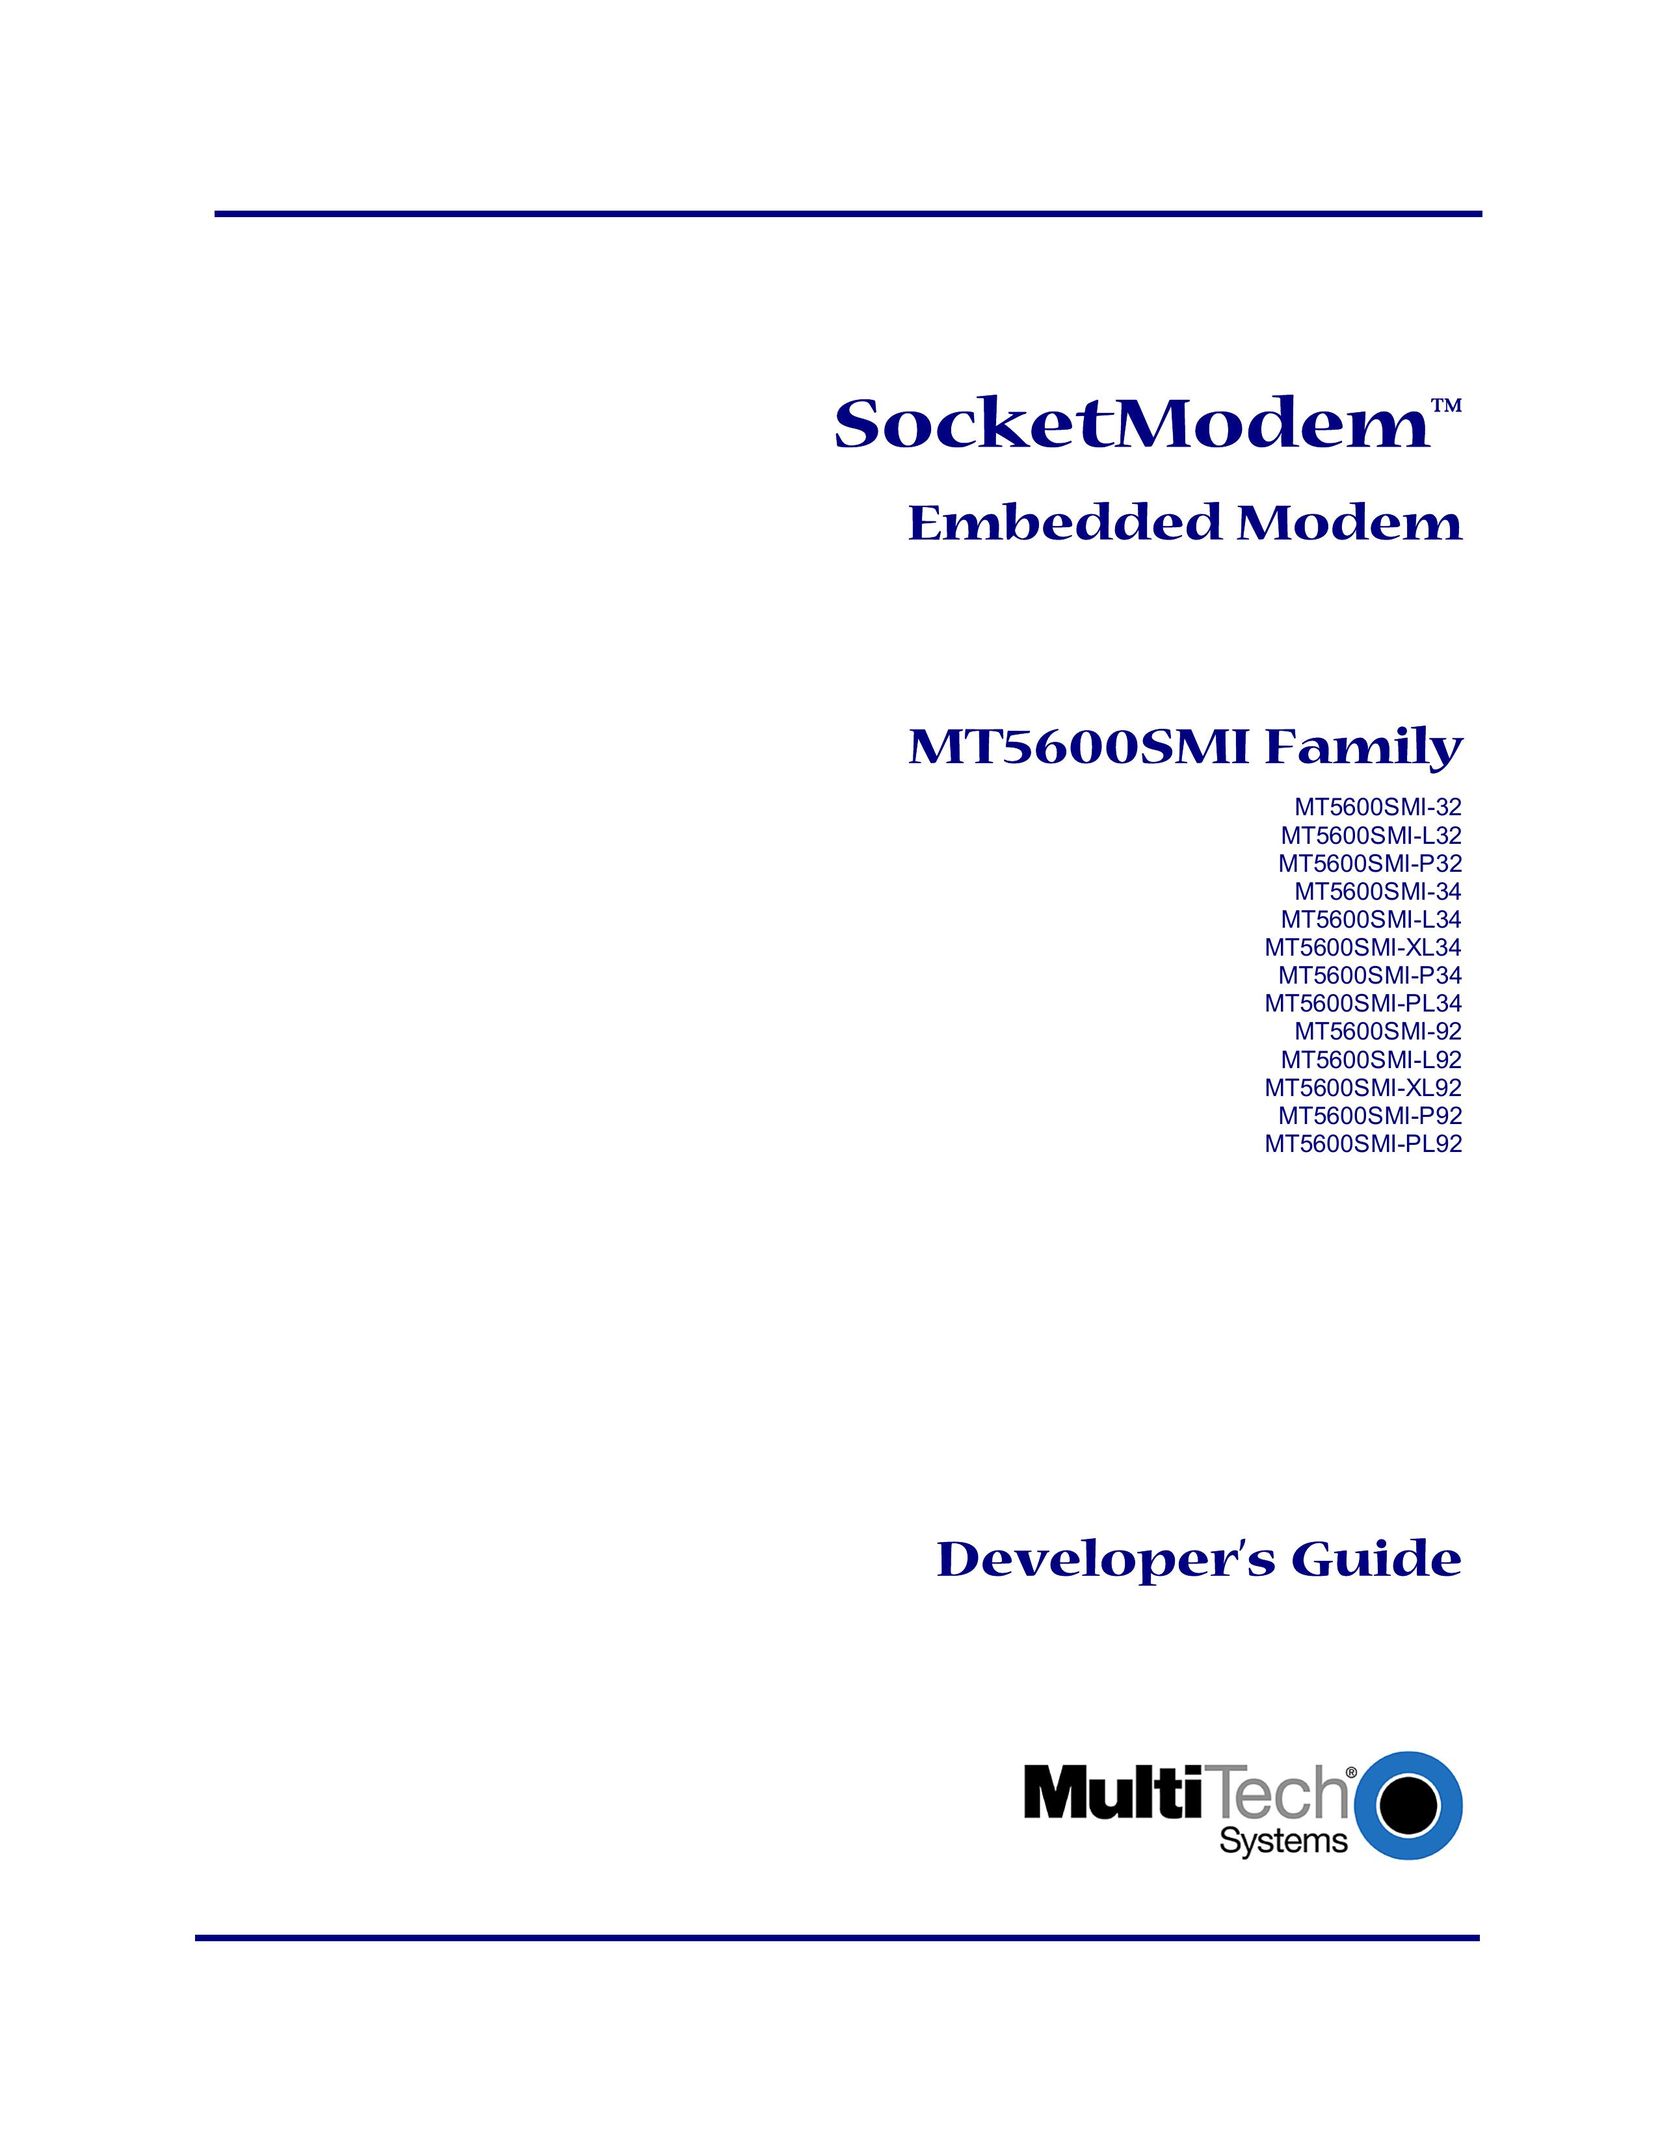 Multi-Tech Systems MT5600SMI-PL92 Modem User Manual